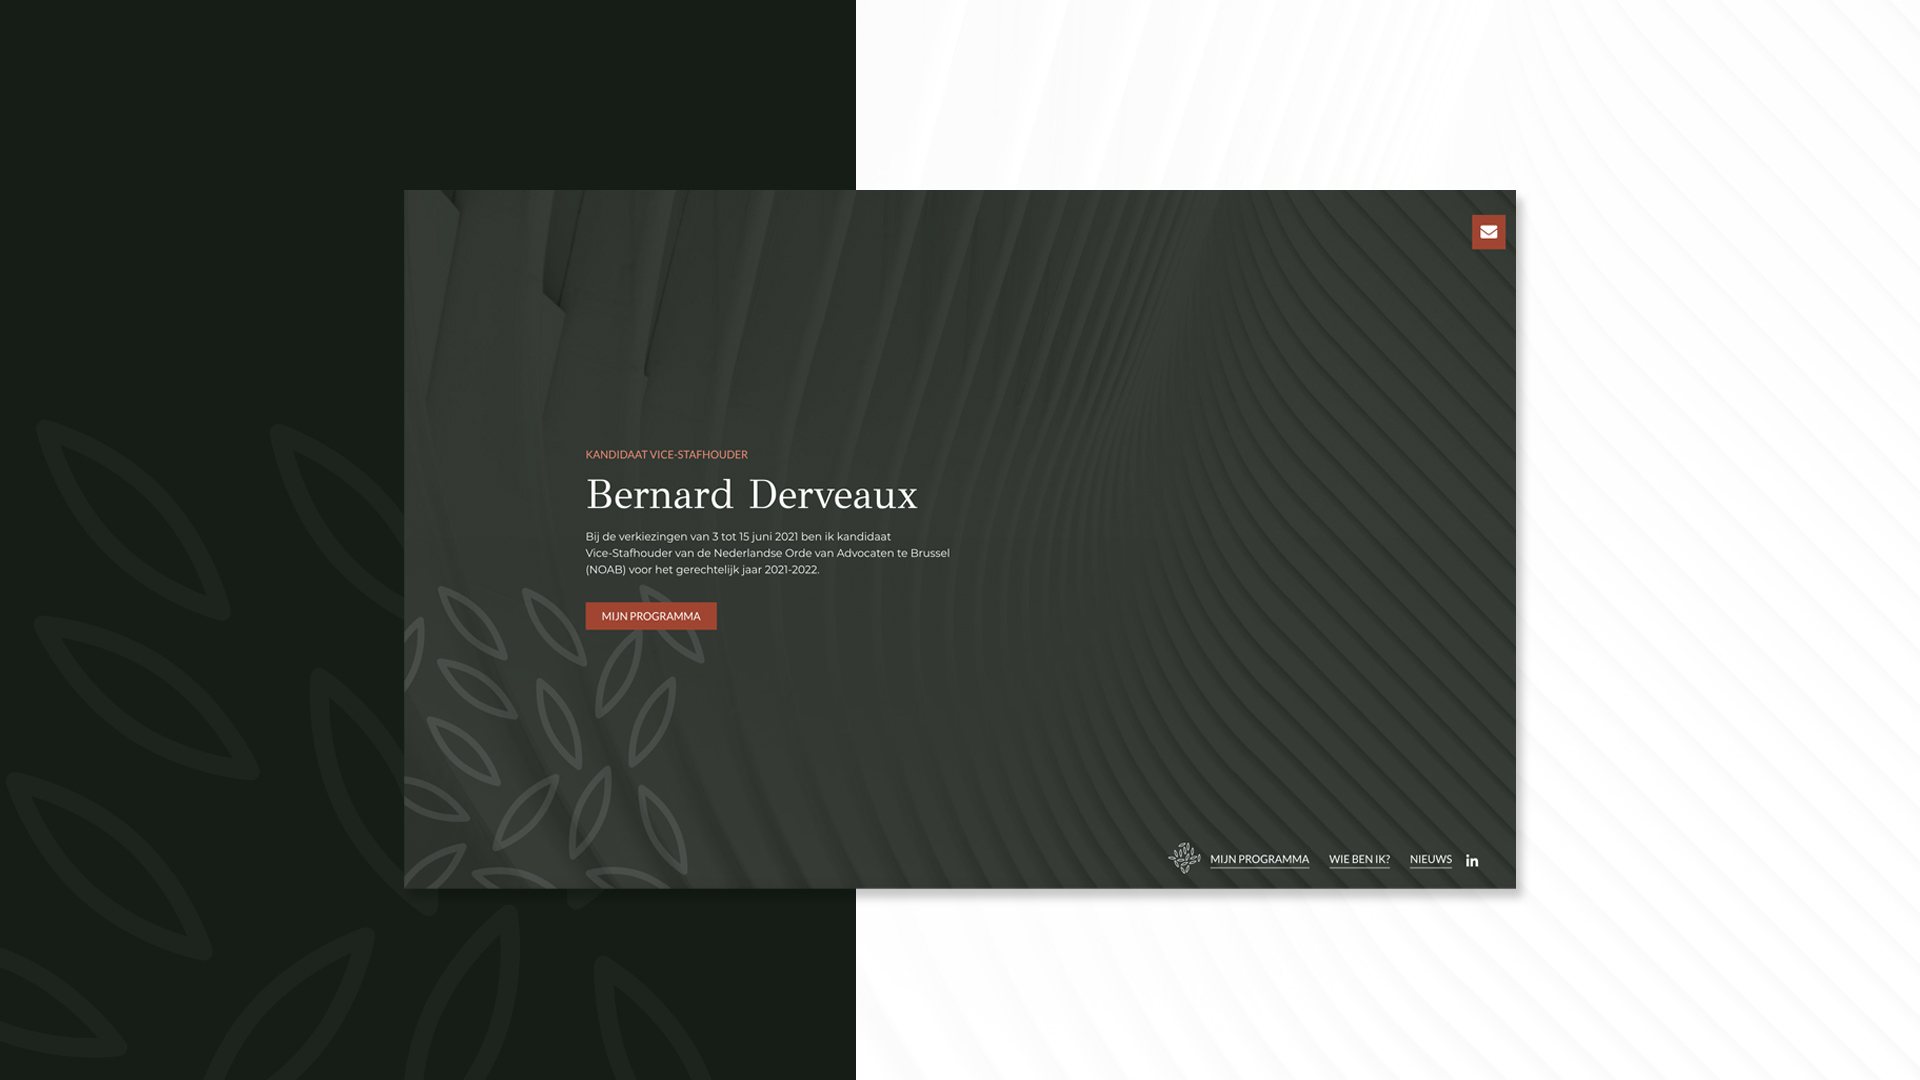 Bernard derveaux homepage